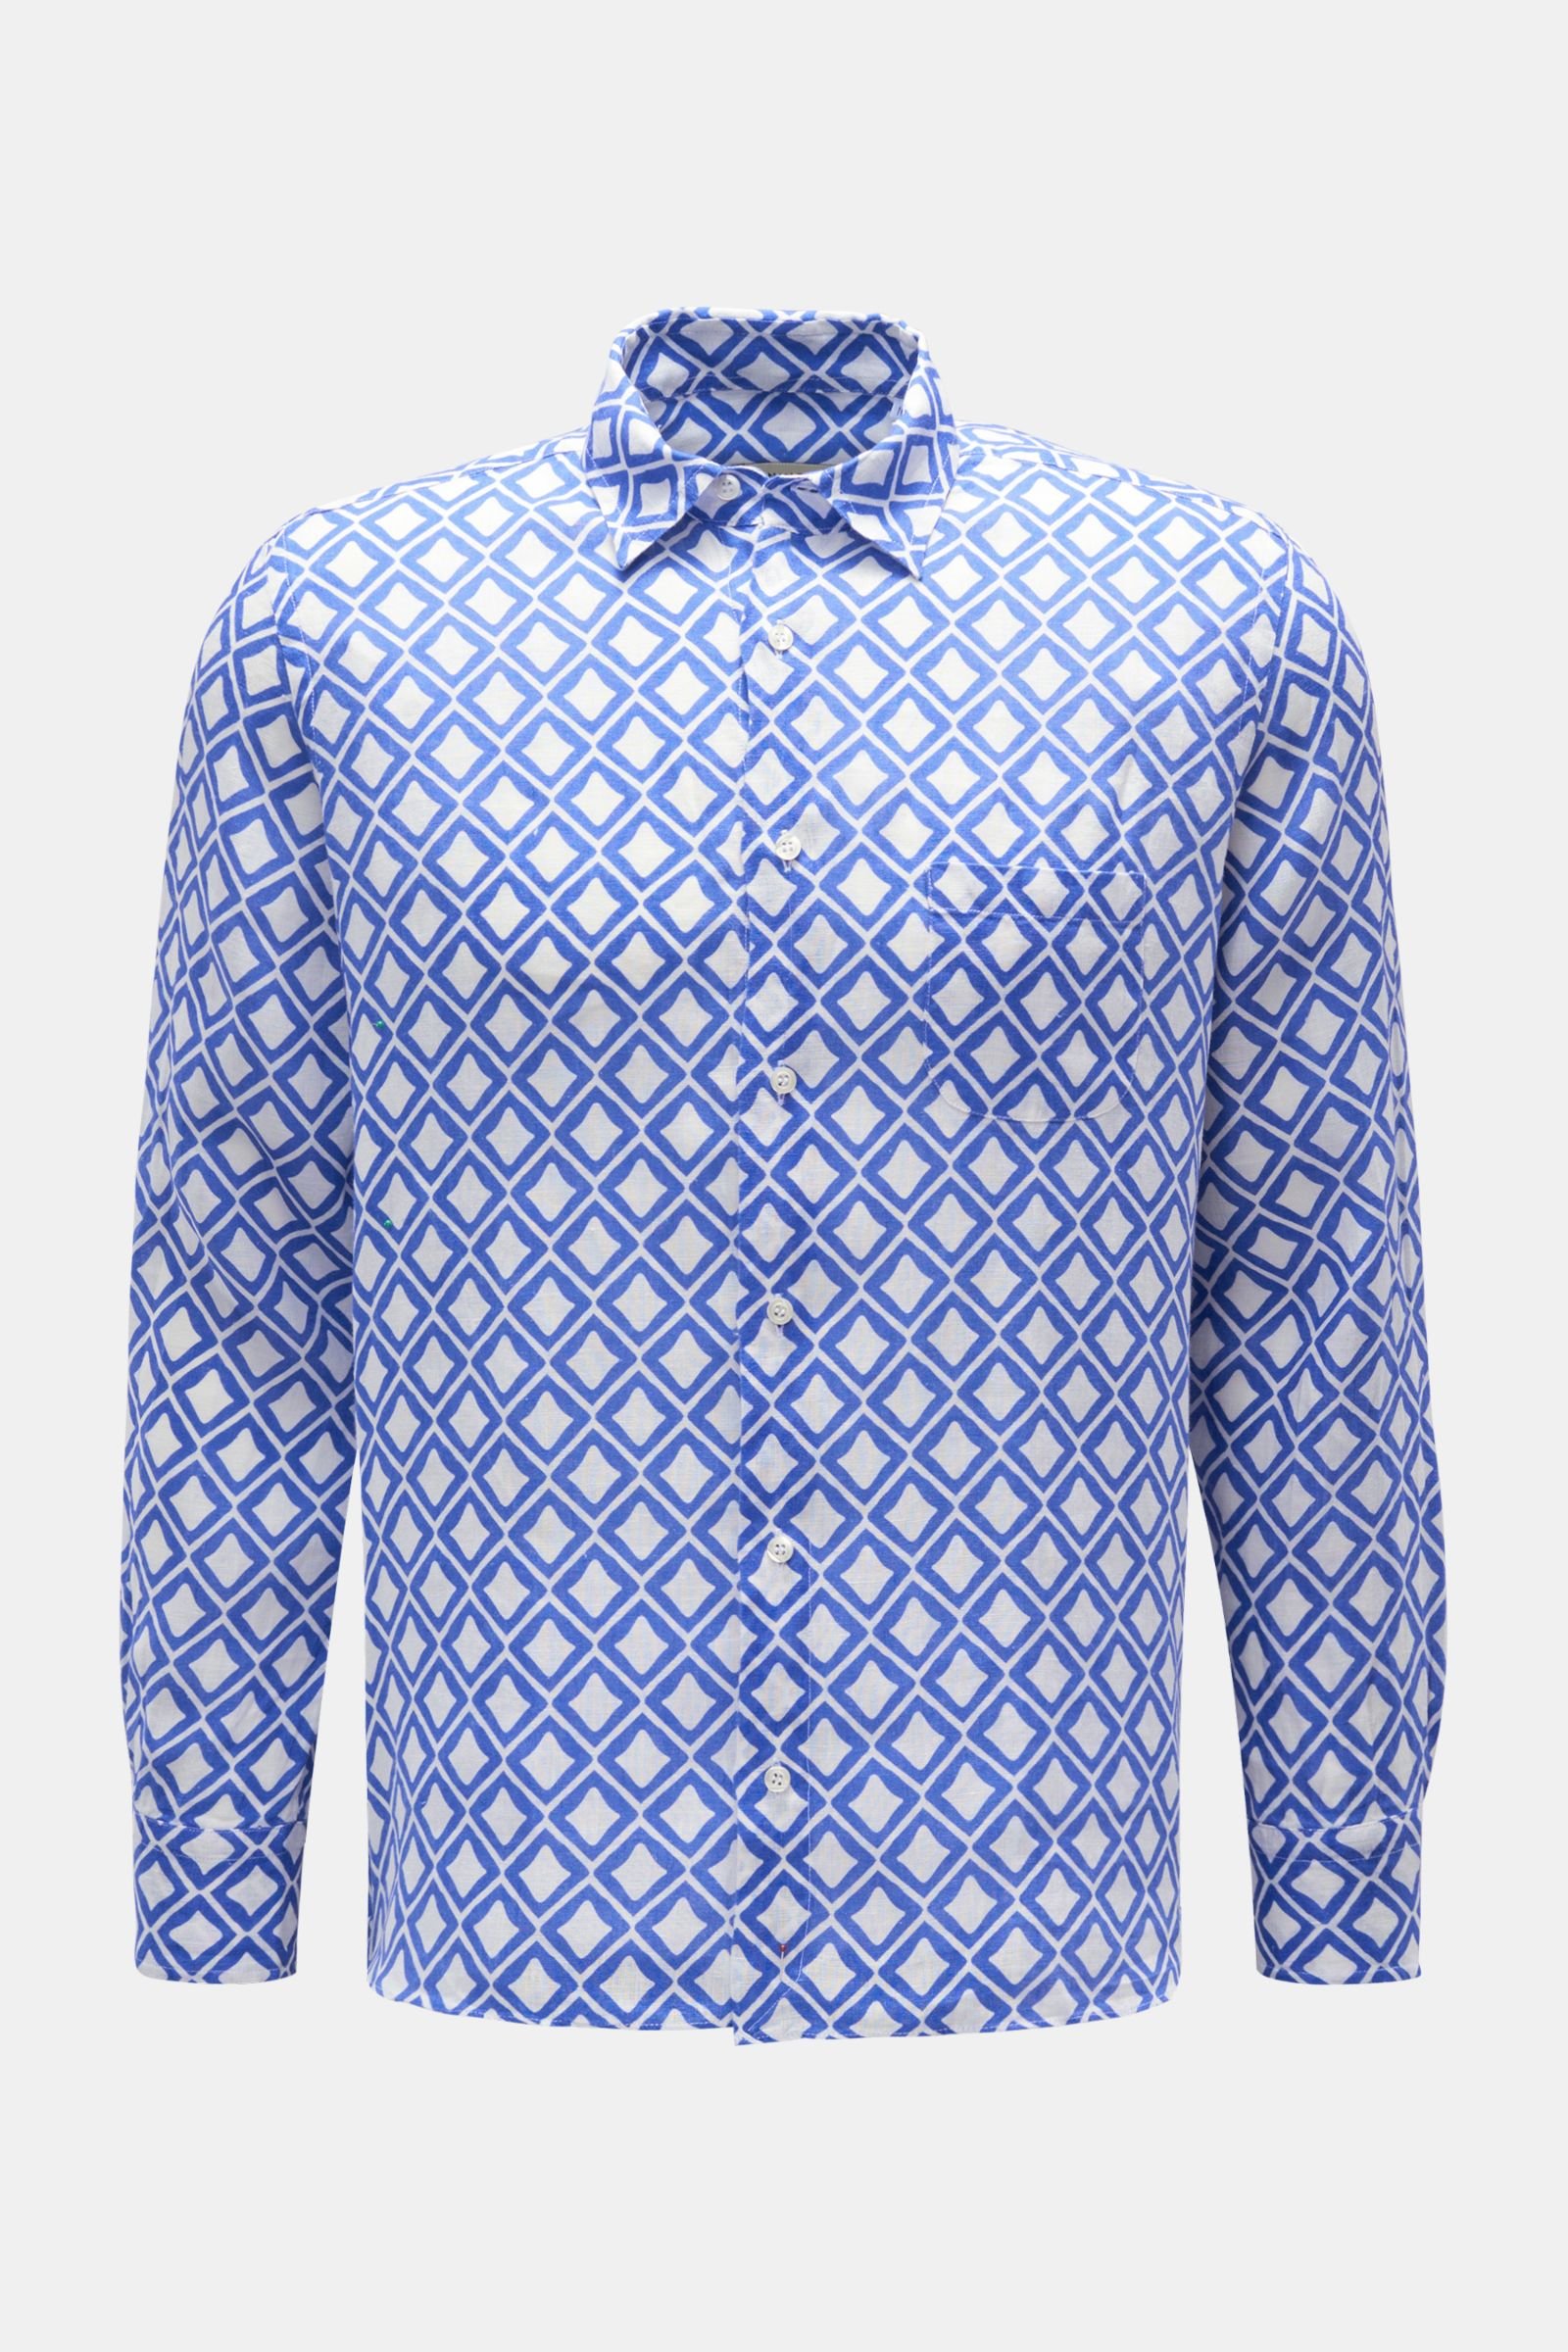 Linen shirt narrow collar white/blue patterned